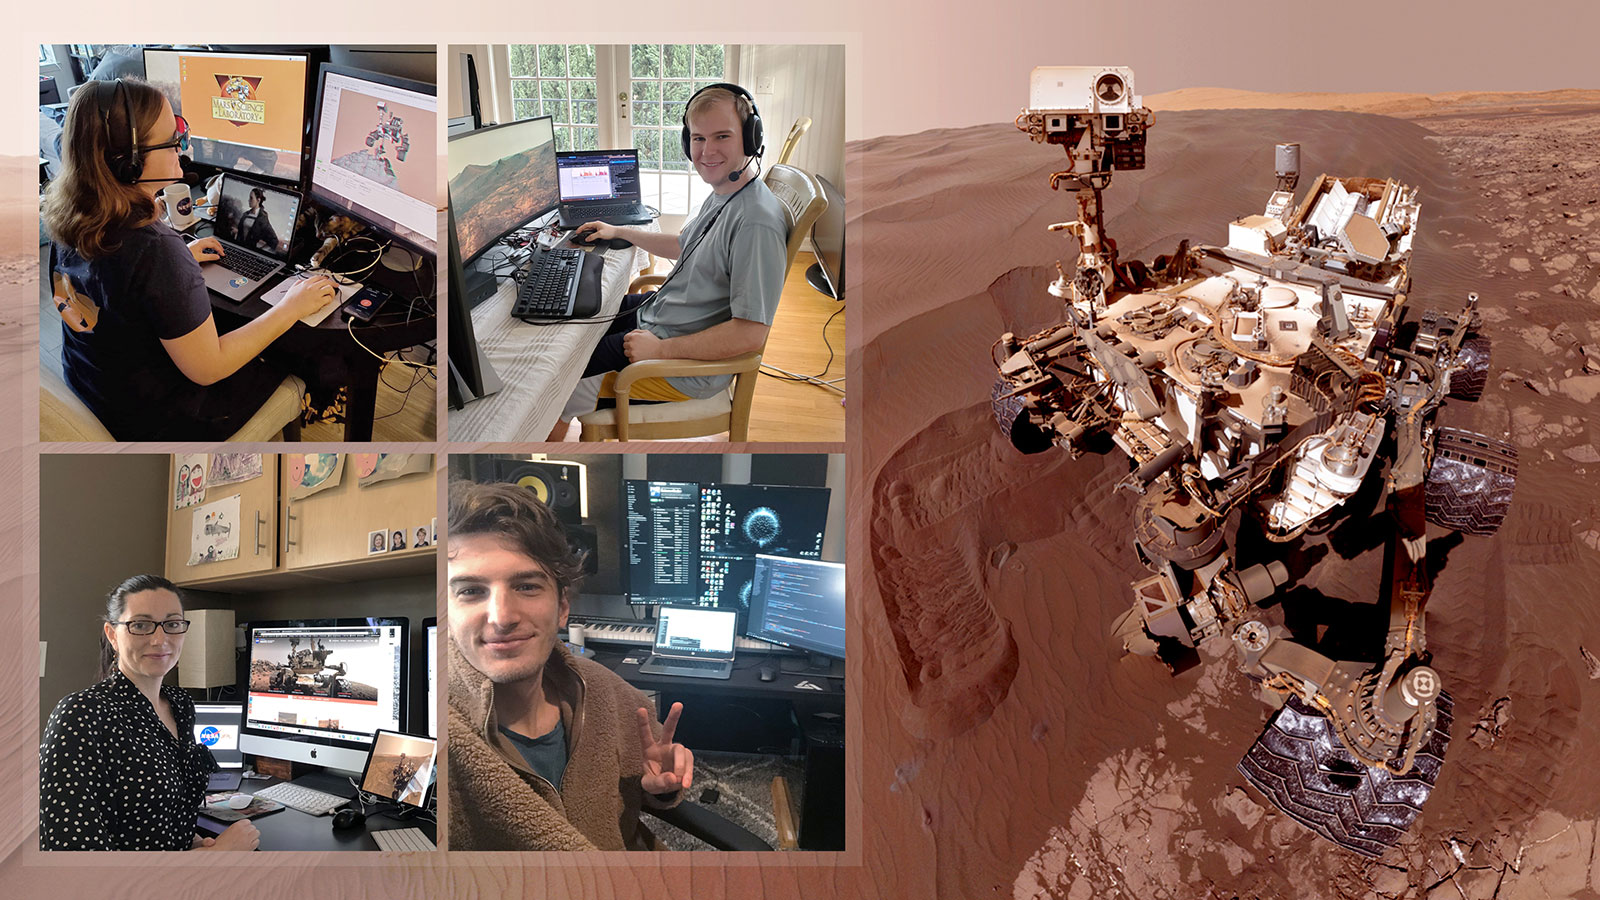 Members of NASA's Curiosity Mars rover mission team 